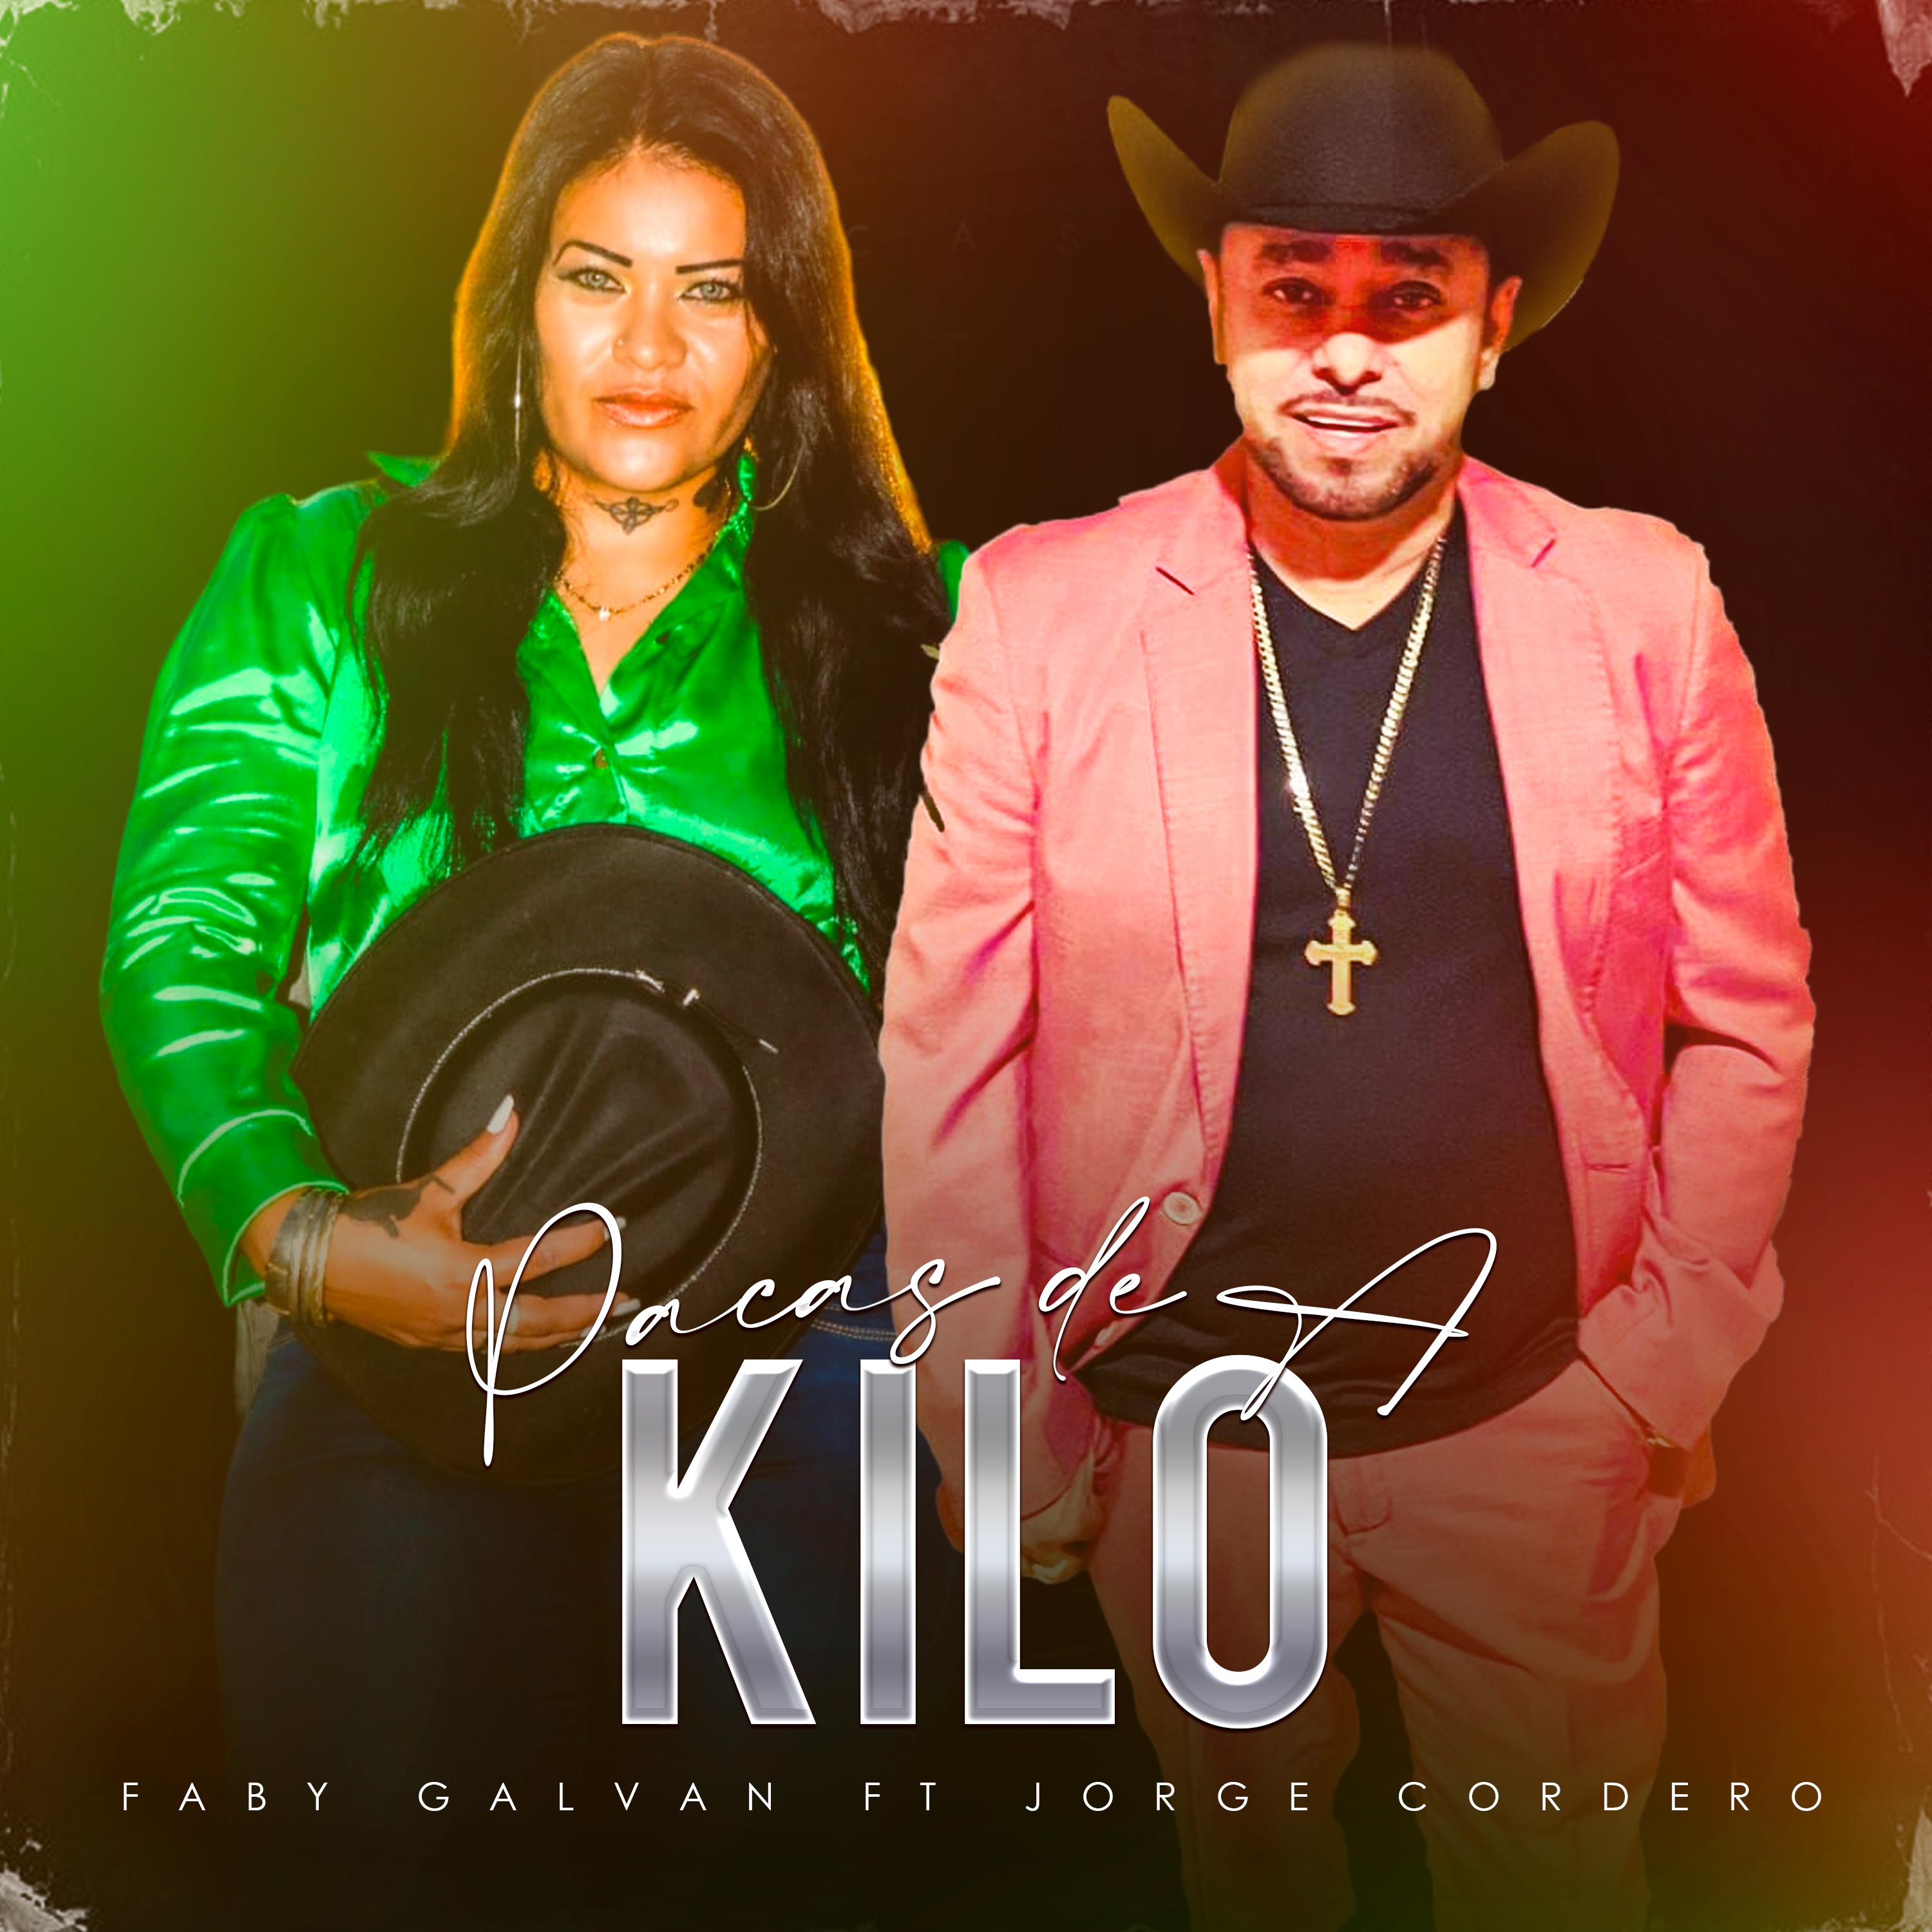 Постер альбома Pacas de a Kilo